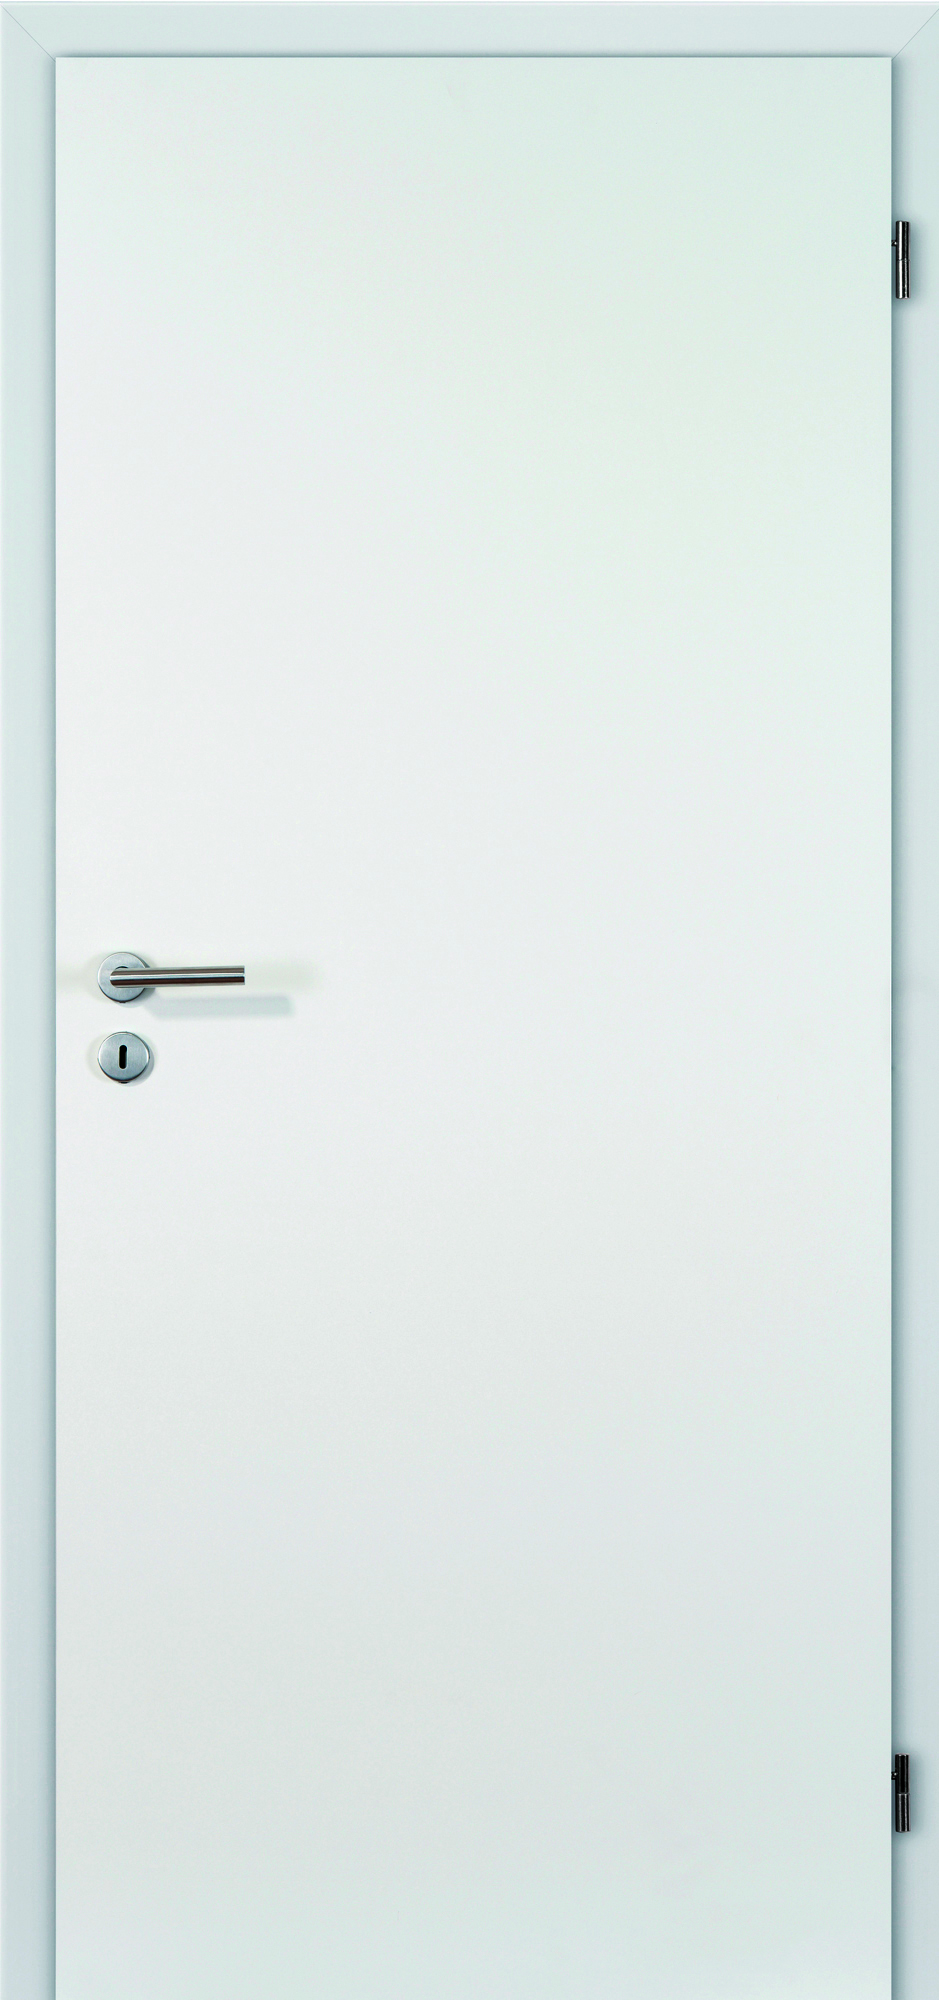 Dveře interiérové Doornite BIANKA DTD bílý lak levá 700 mm